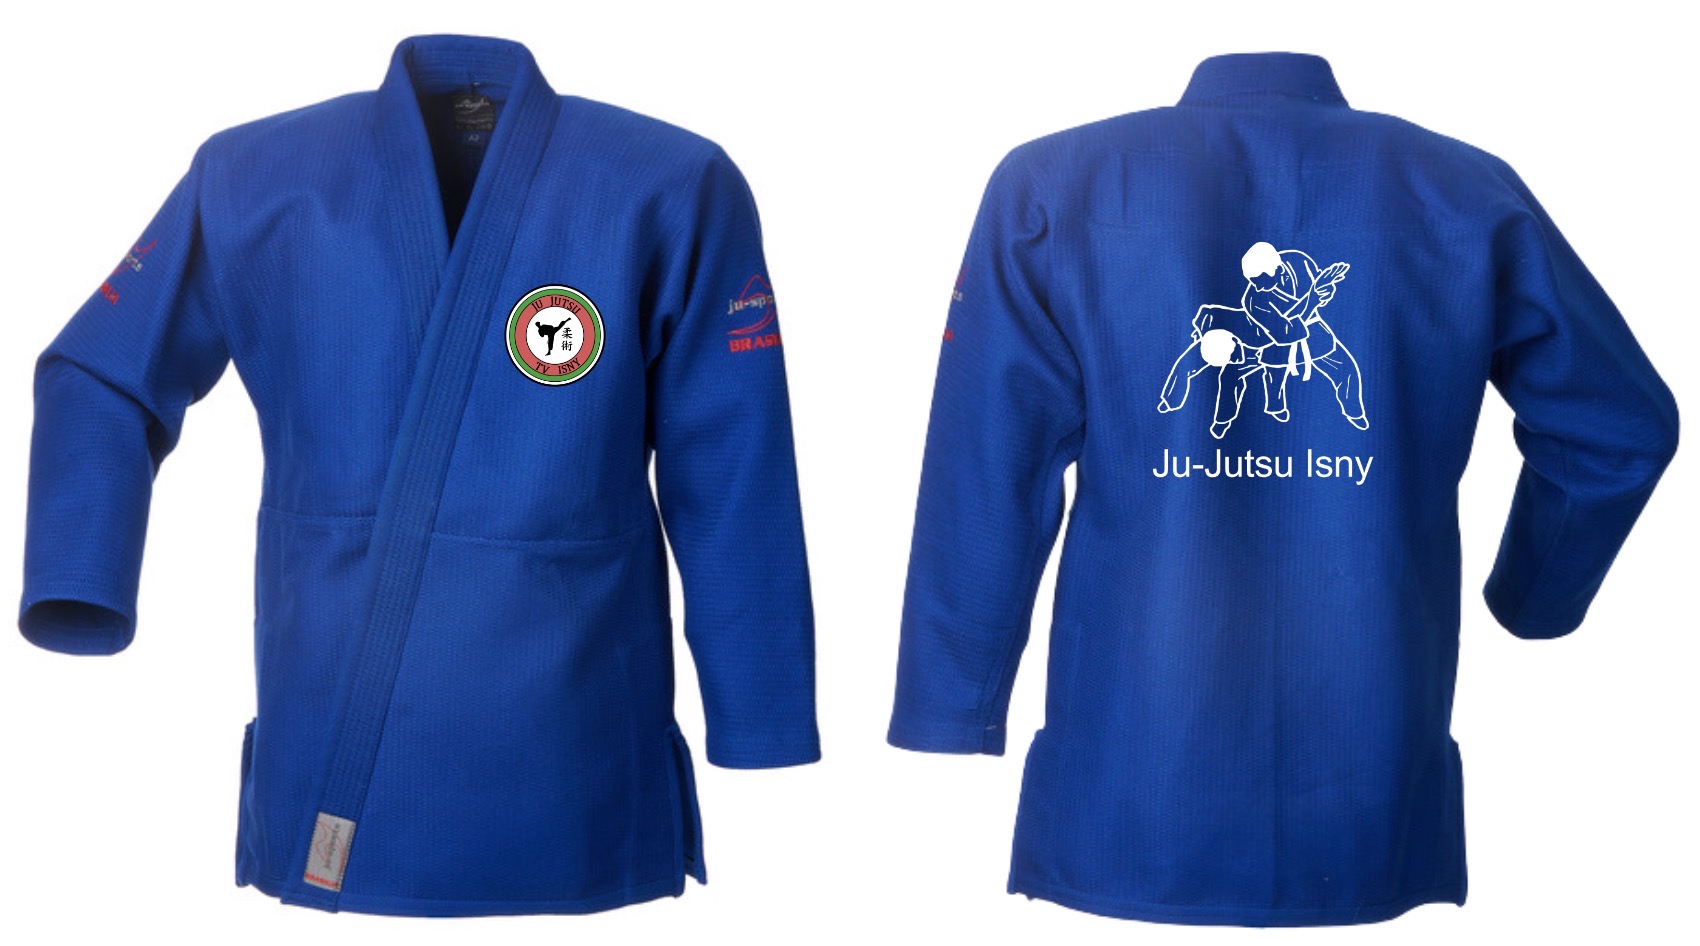 Ju-Sports Ju-Jutsu Gi Brasilia blue